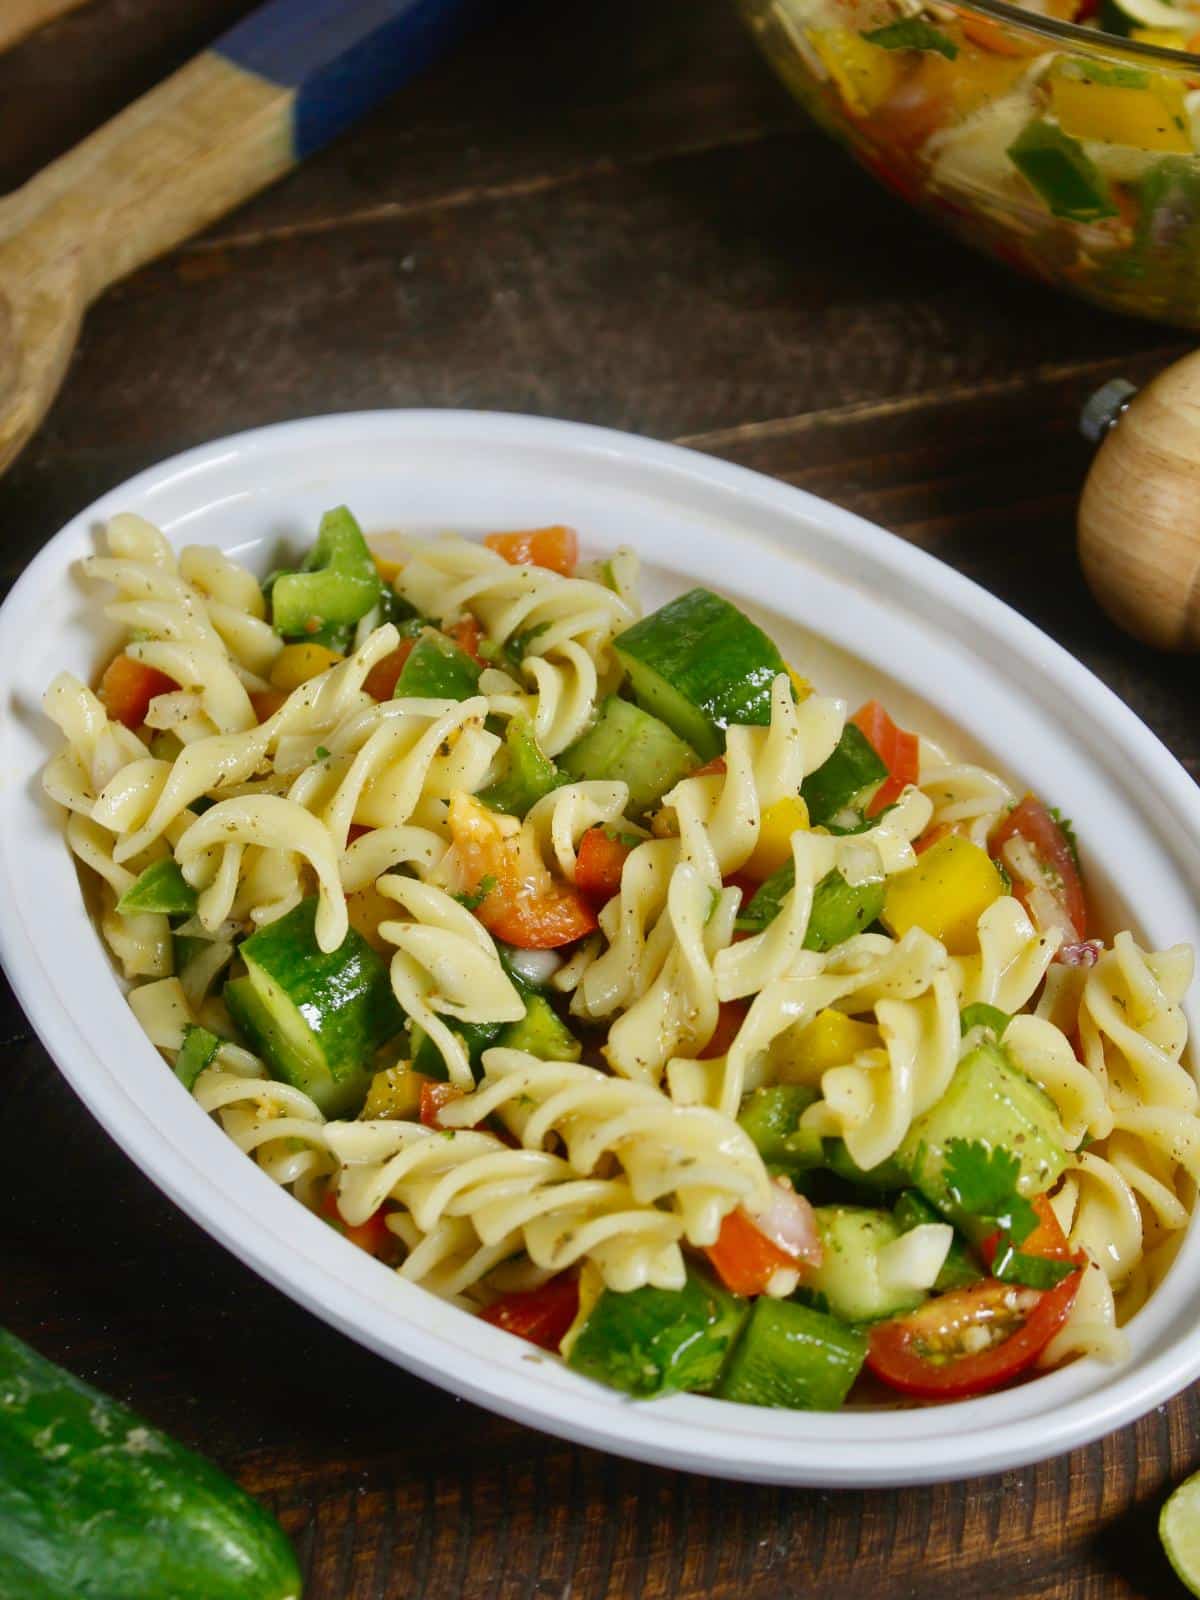 yummy vegetable pasta salad